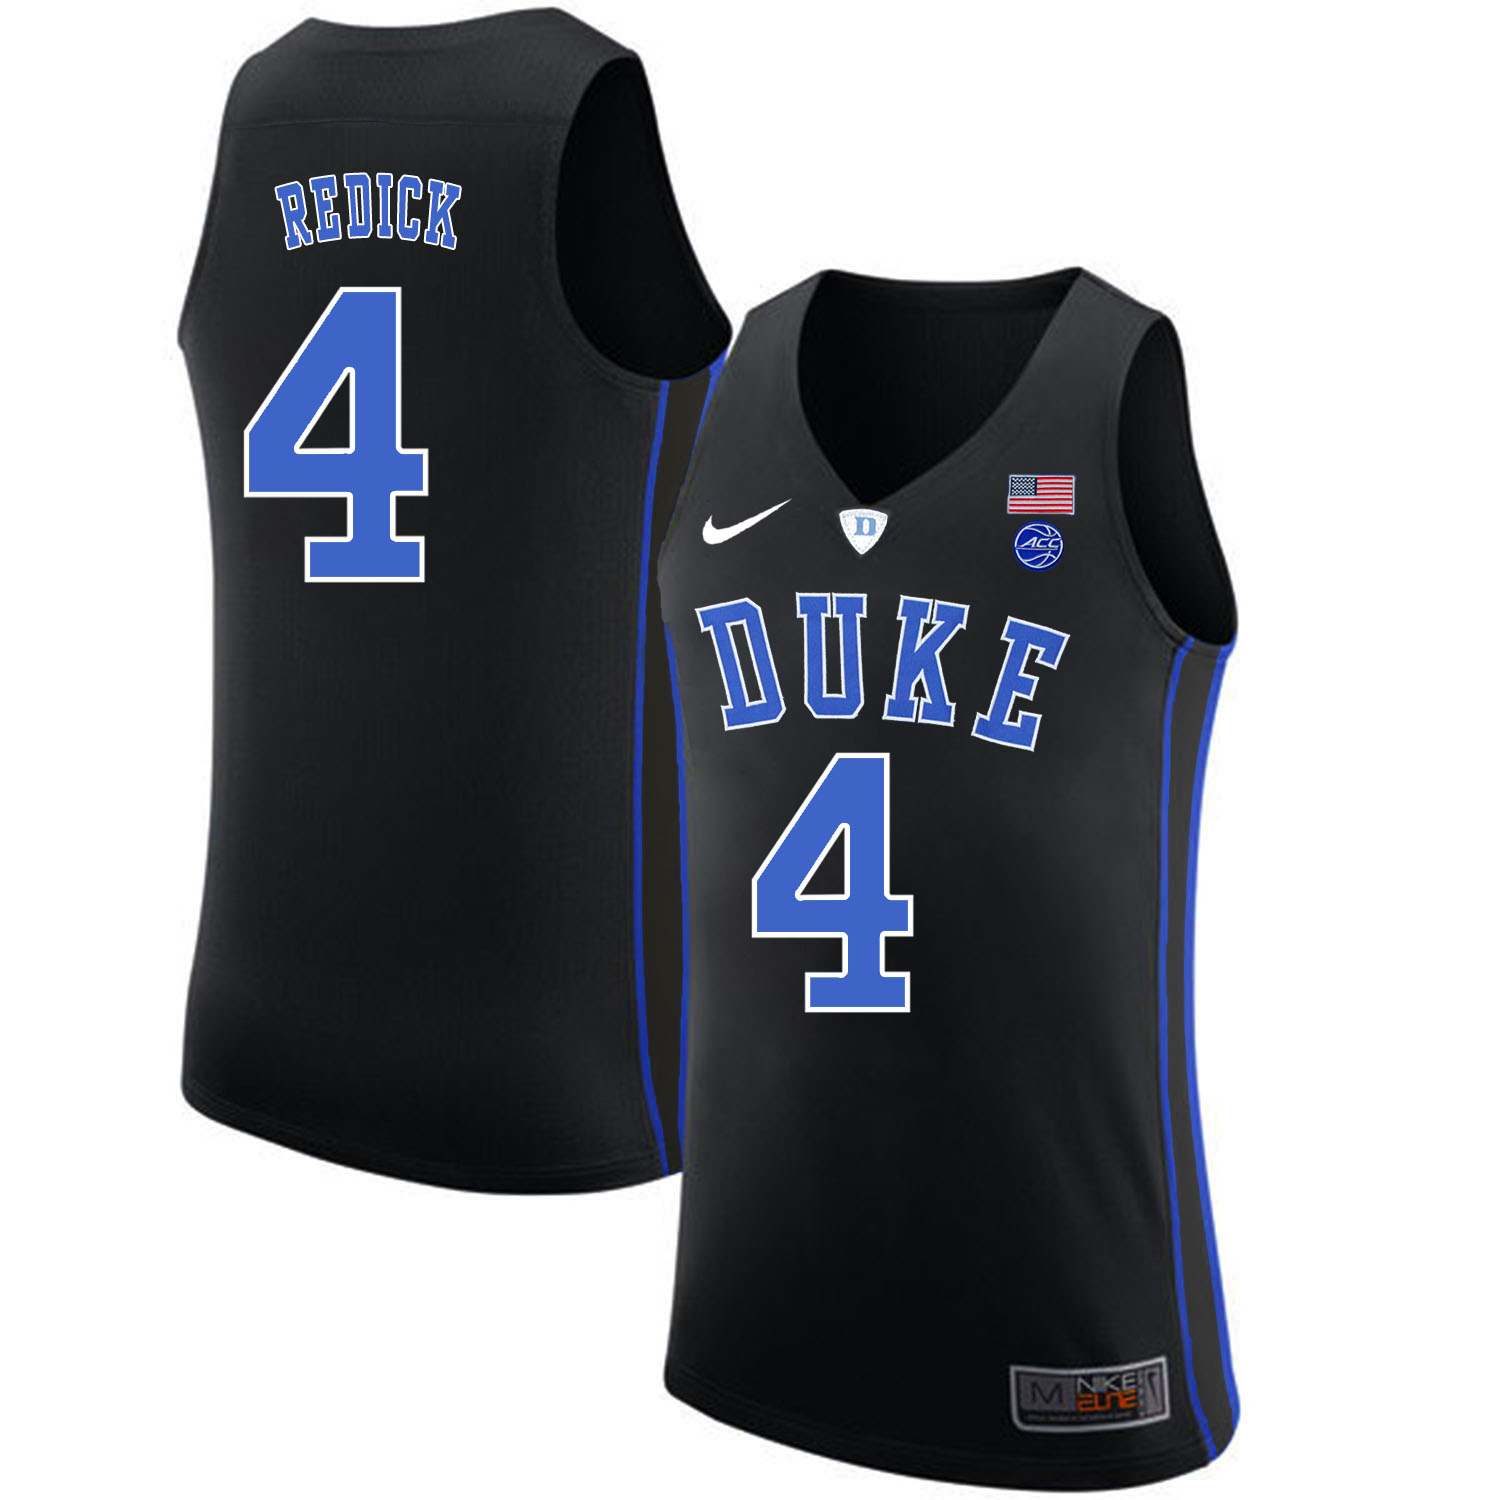 Duke Blue Devils 4 JJ Redick Black Nike College Basketball Jersey